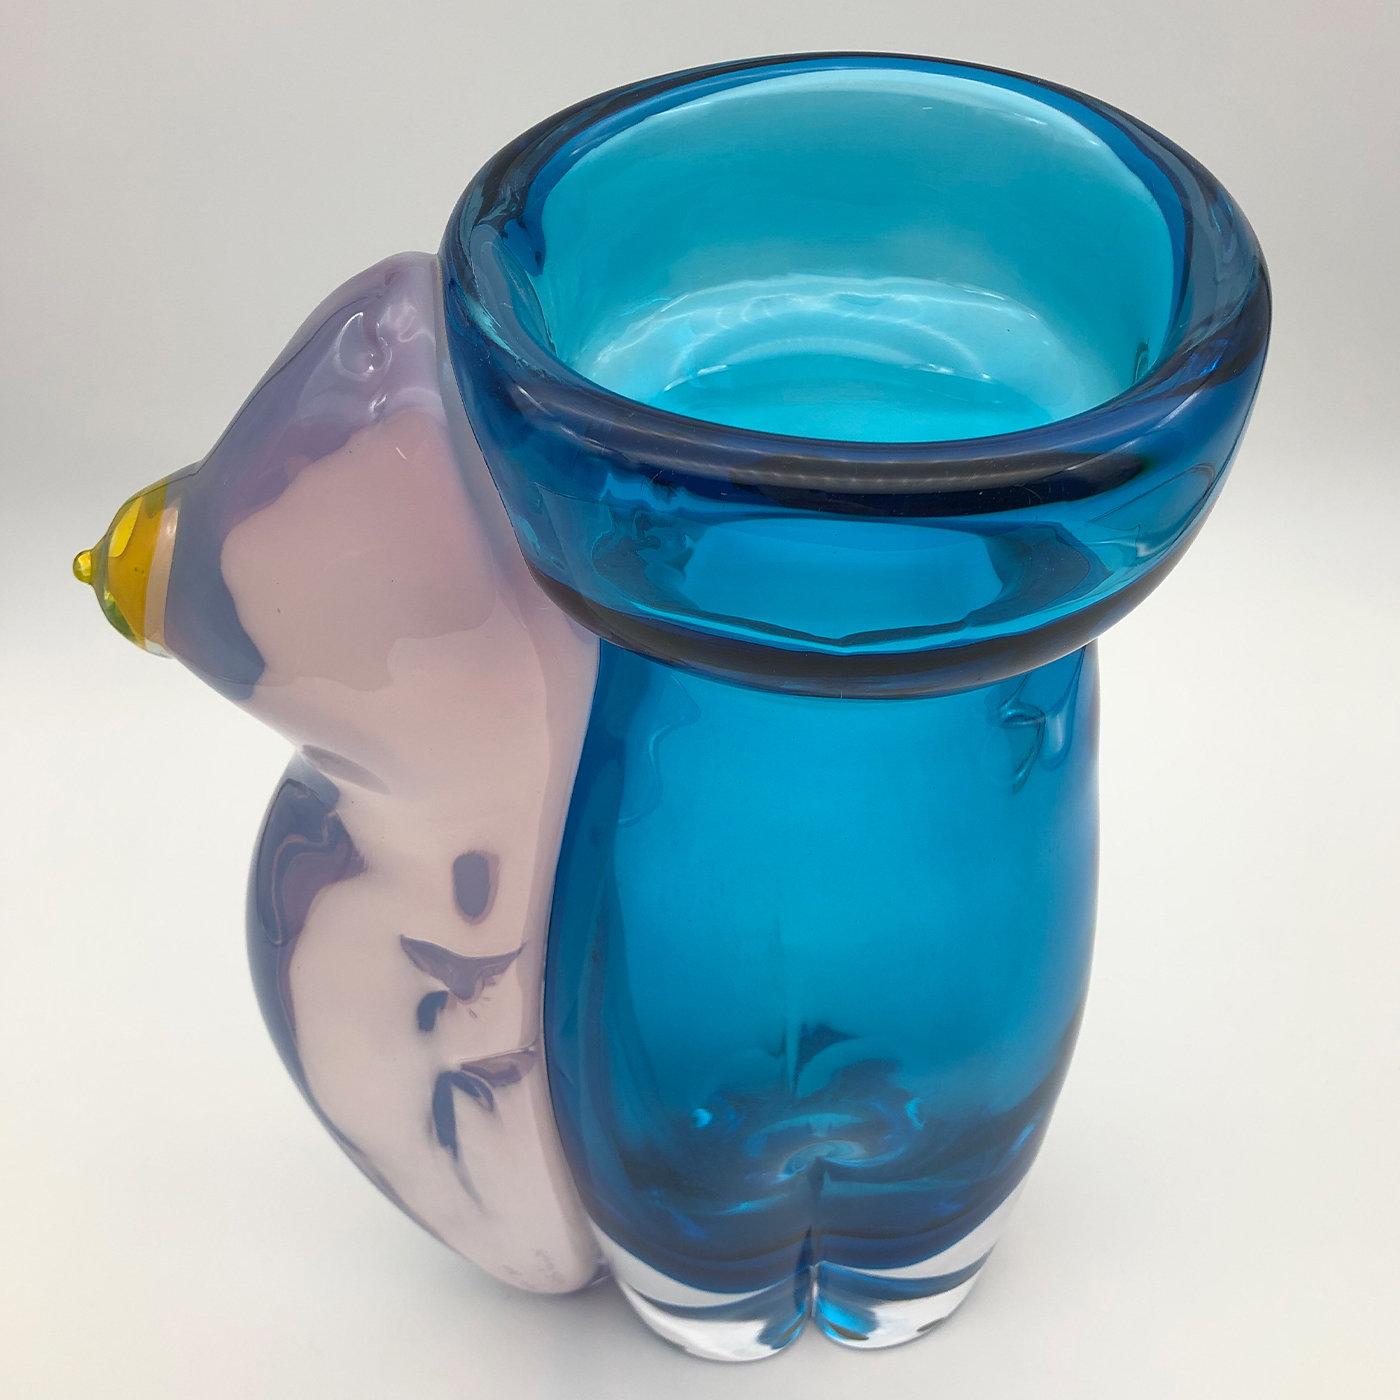 Italian Eros Aquamarine Vase #1 by Toso Cristiano